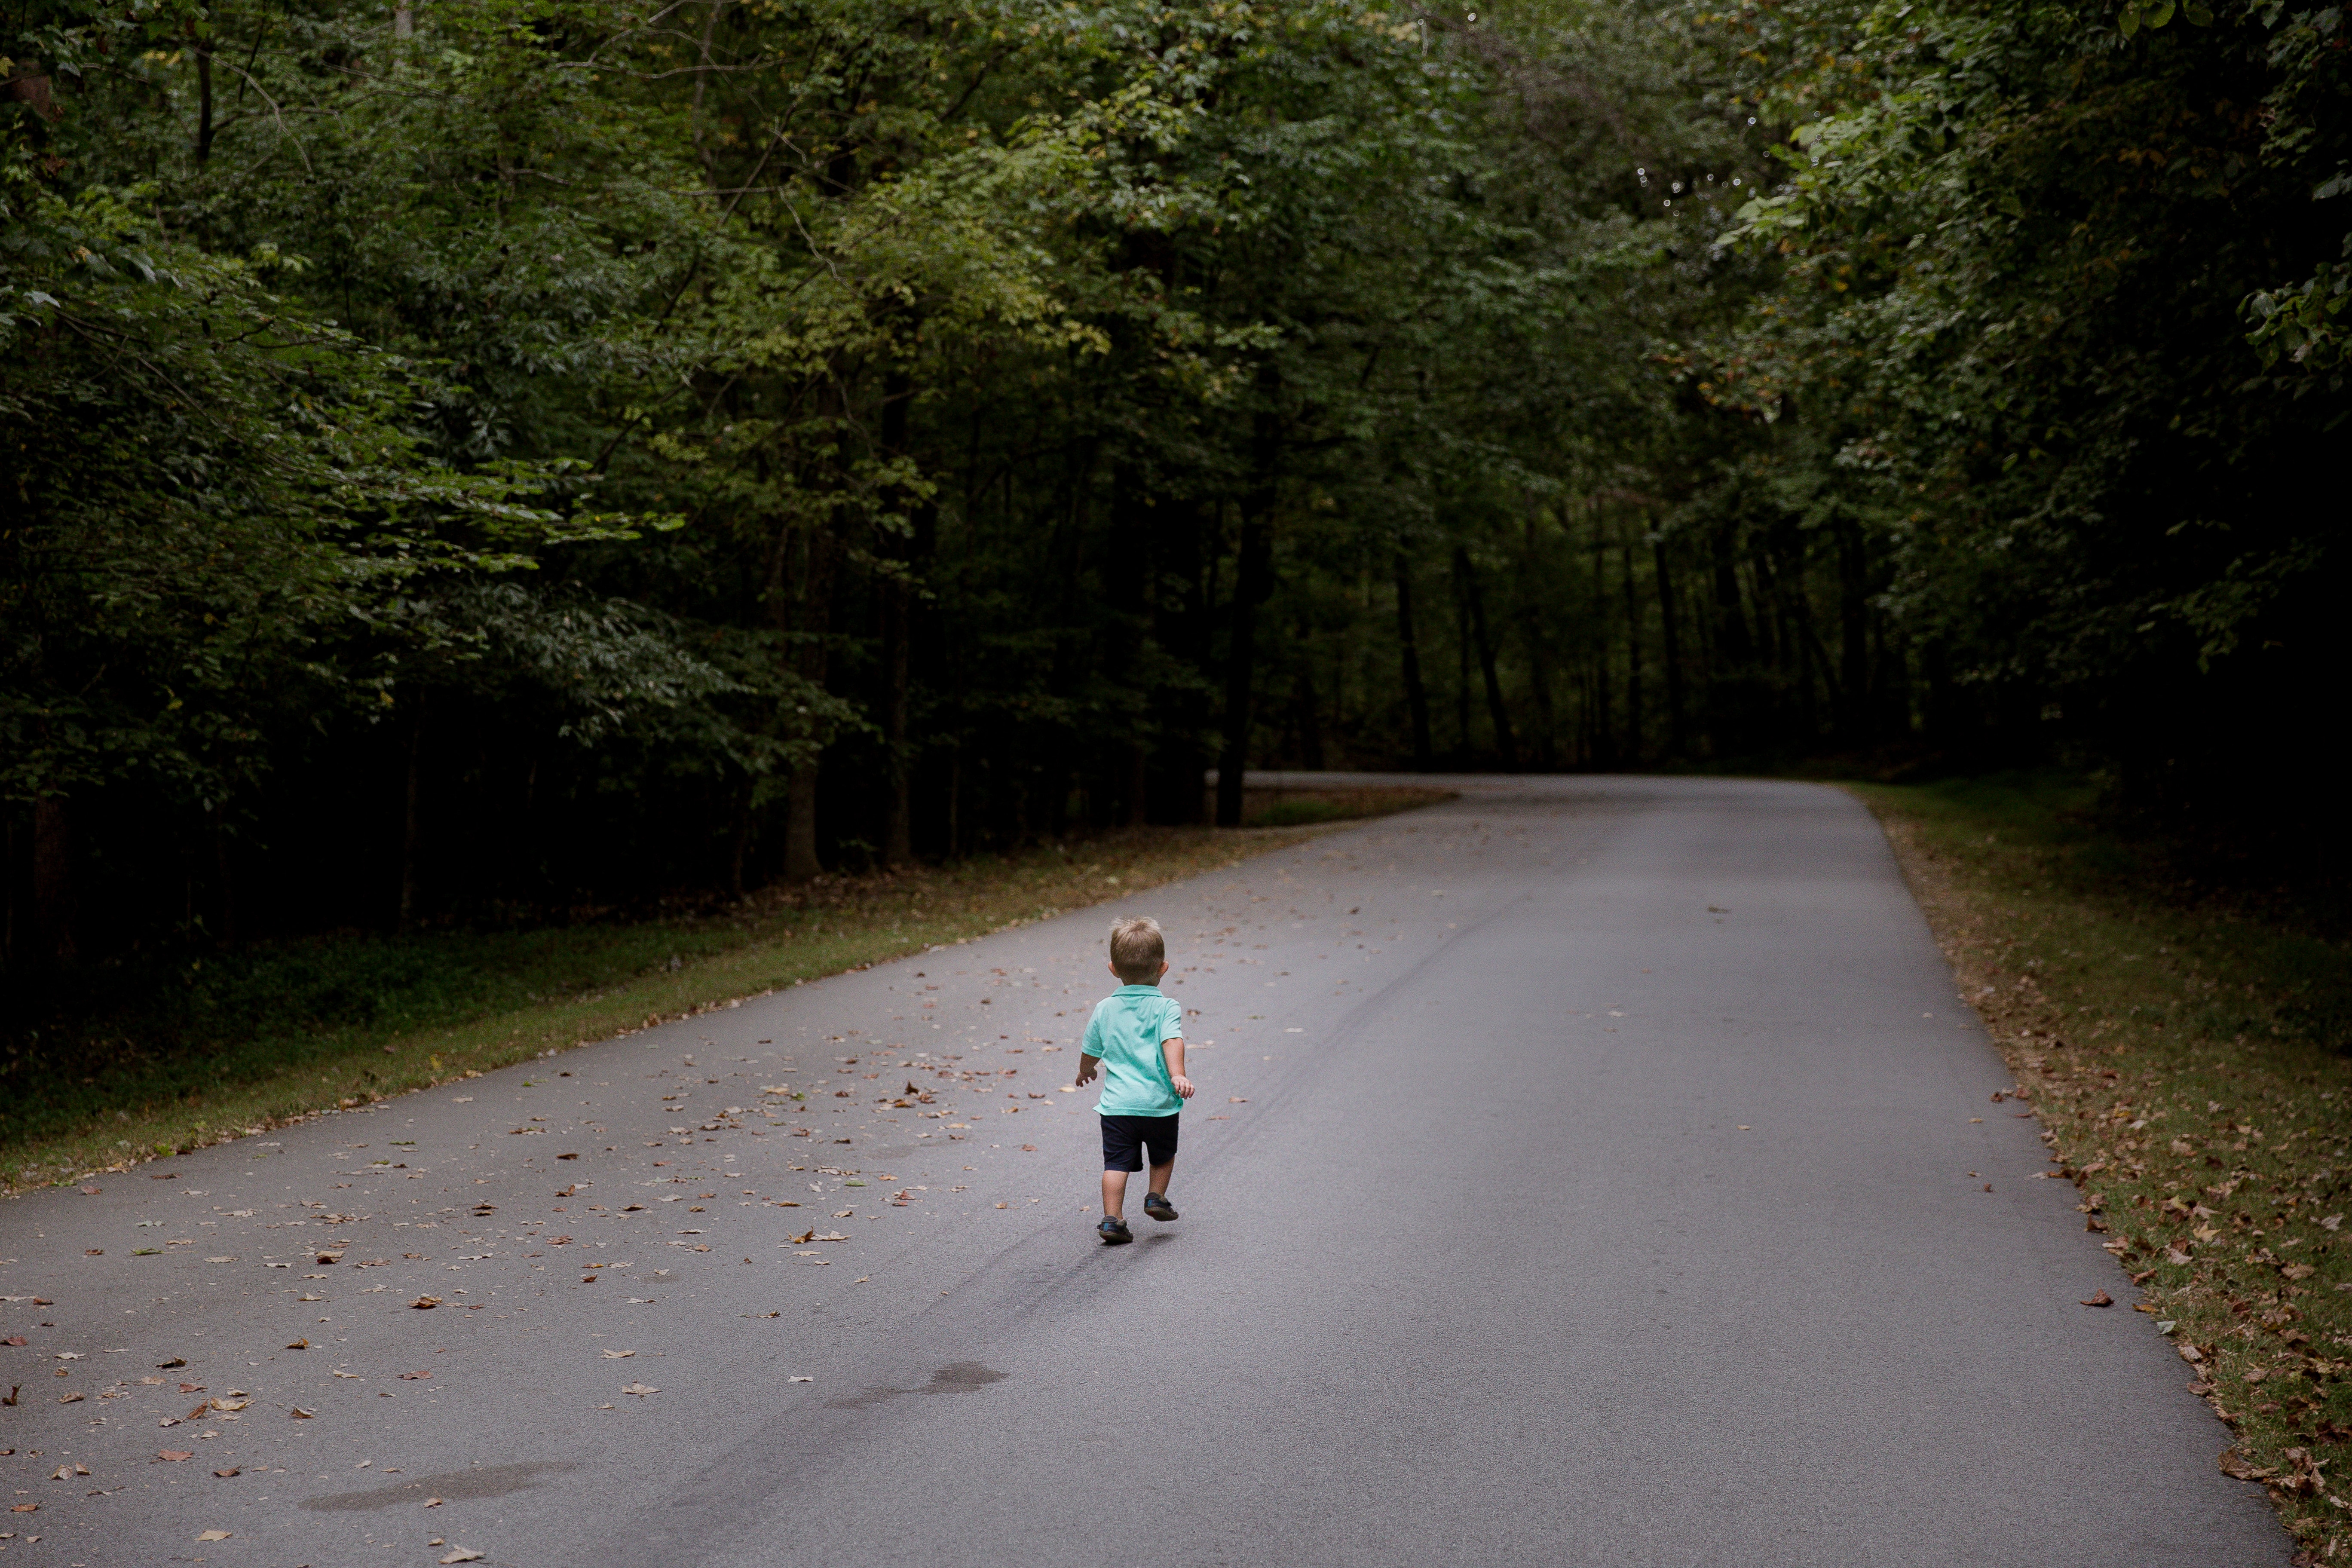 boy wearing teal shirt and black short walking in the black asphalt road